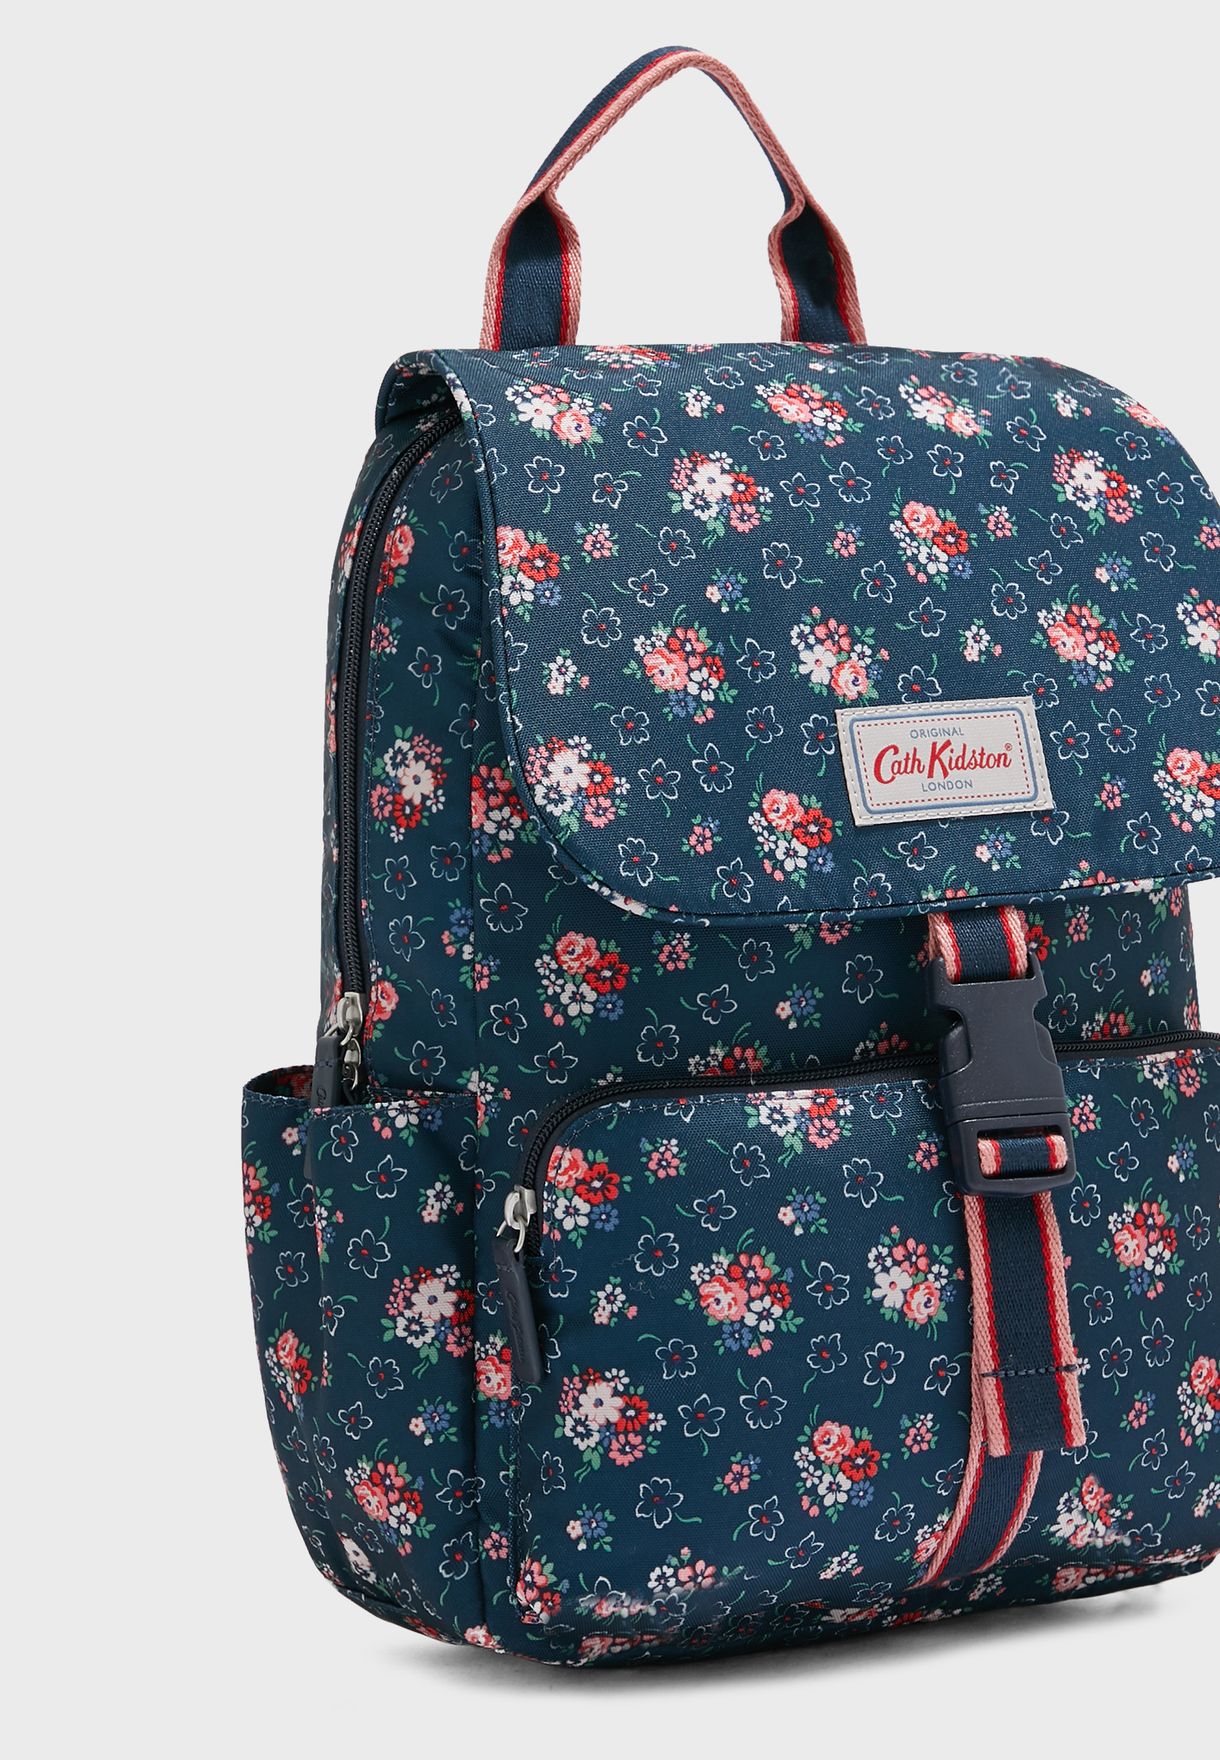 cath kidston school bags for girls